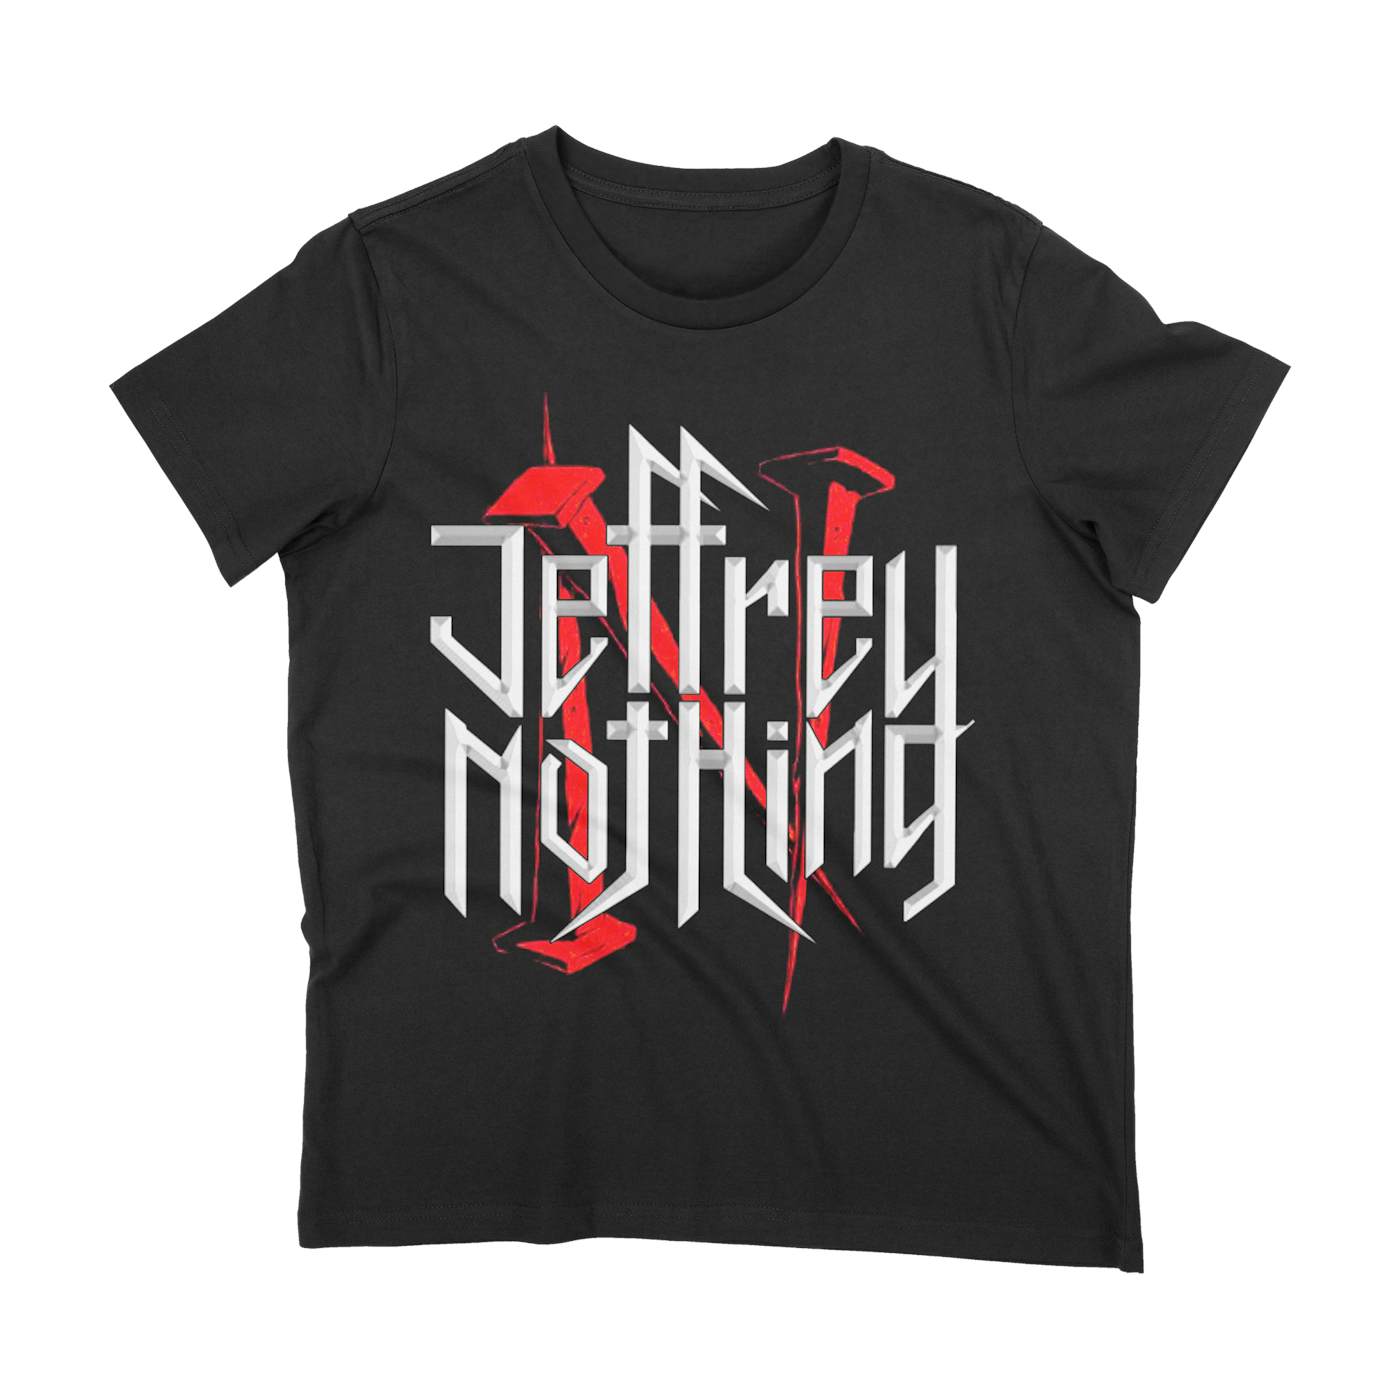 Jeffrey Nothing - Nails Womans Shirt